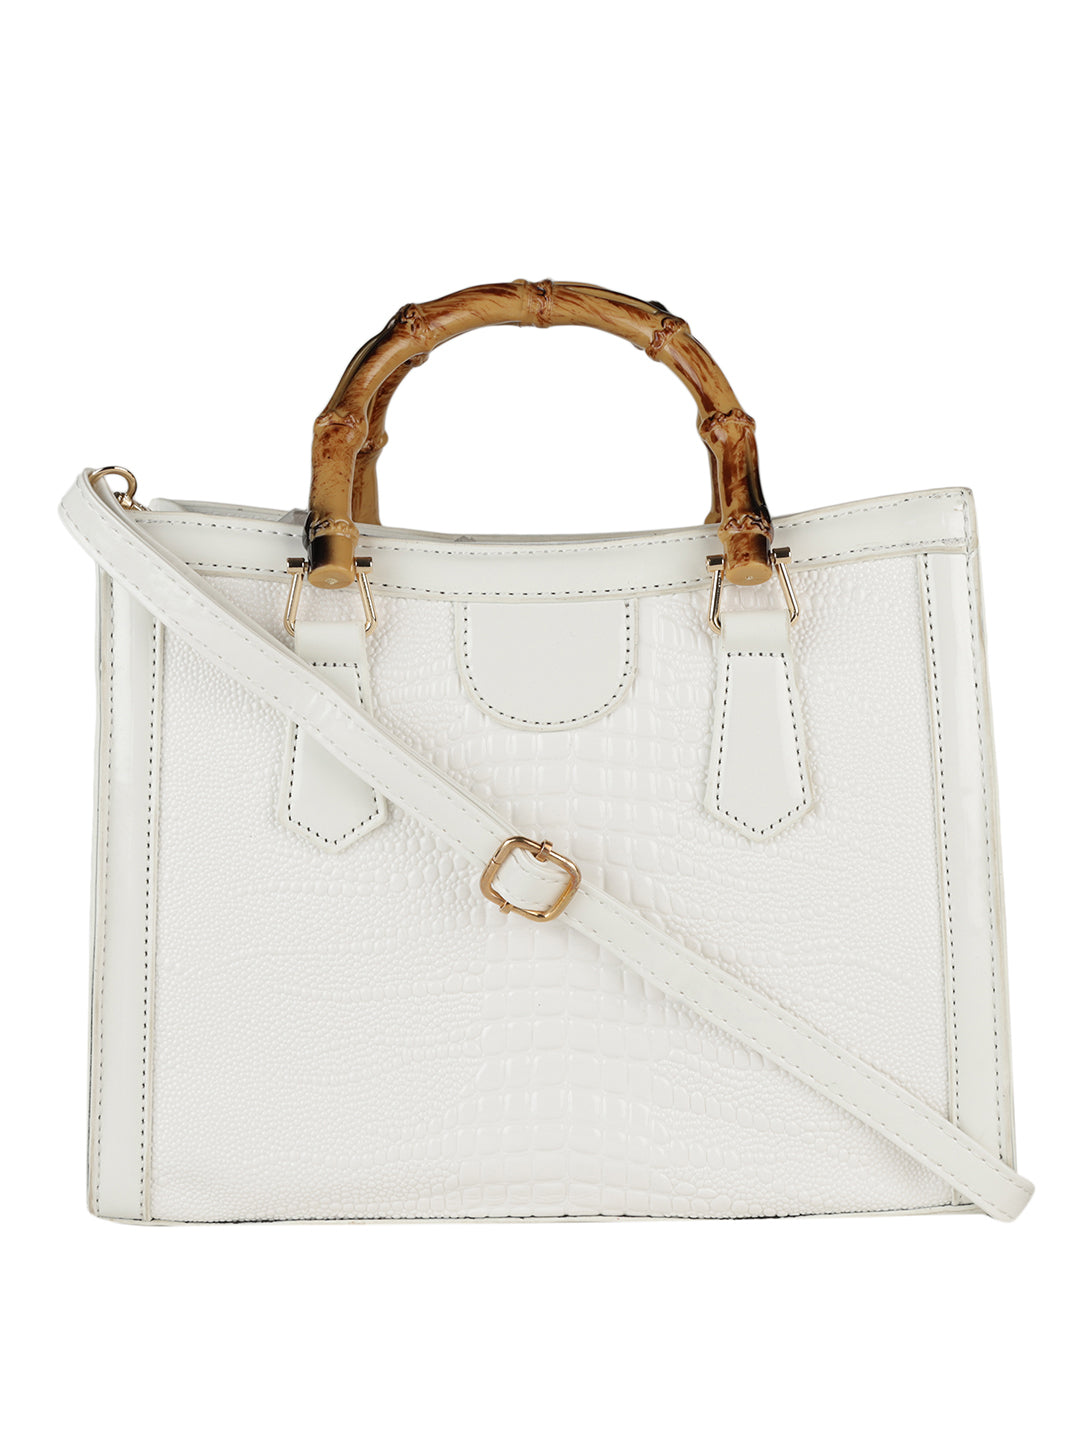 MINI WESST Women's White Handheld Bag(MWHB115WT)